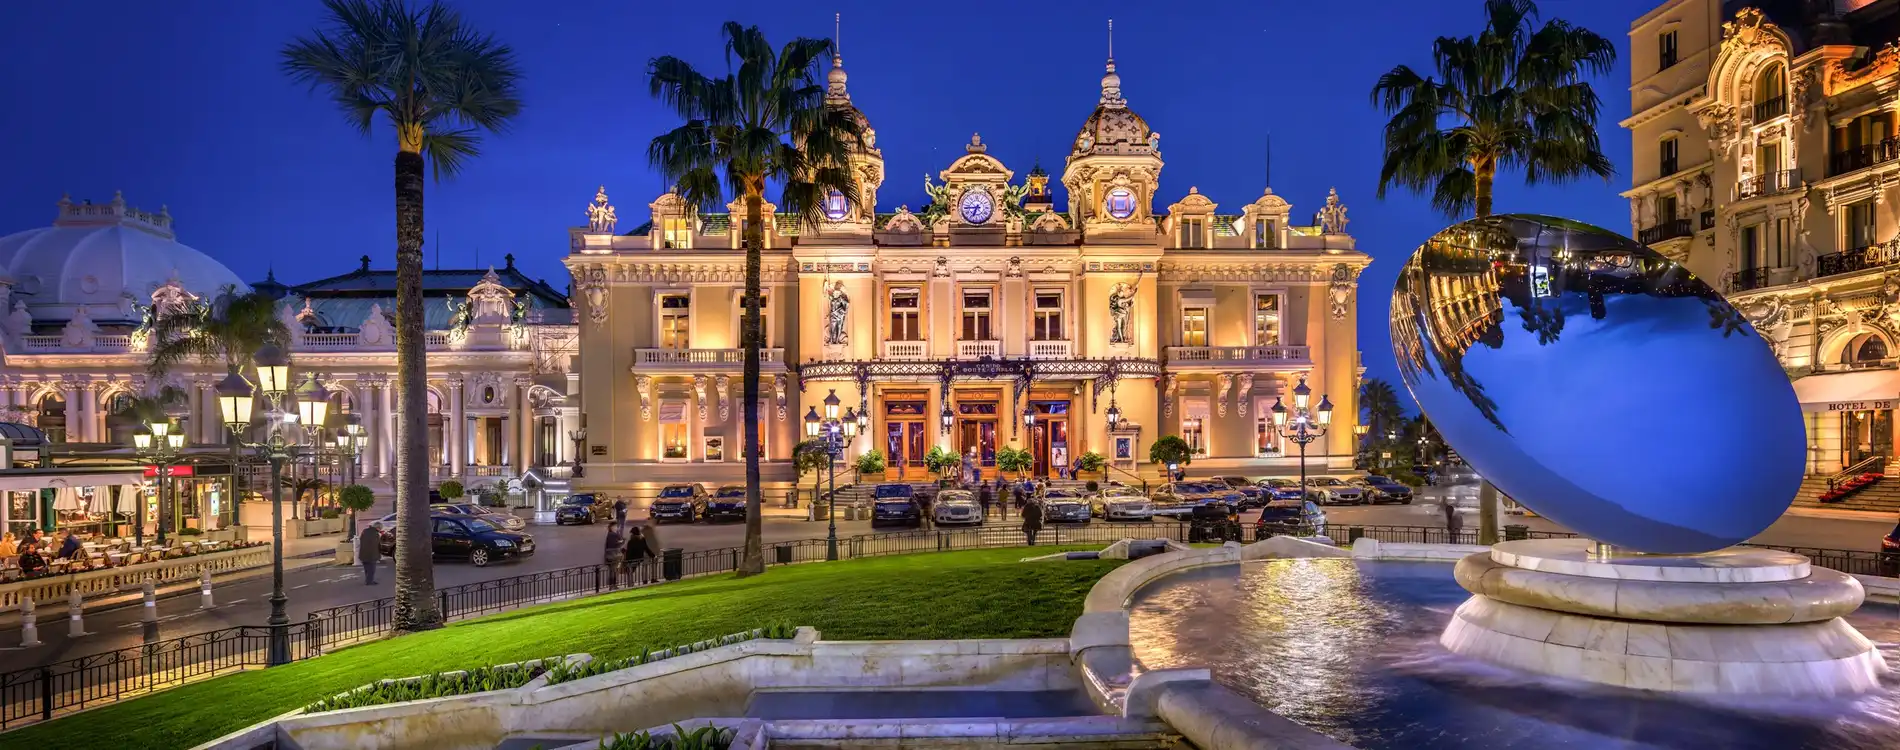 Casino de Monte-Carlo - Façade de nuit